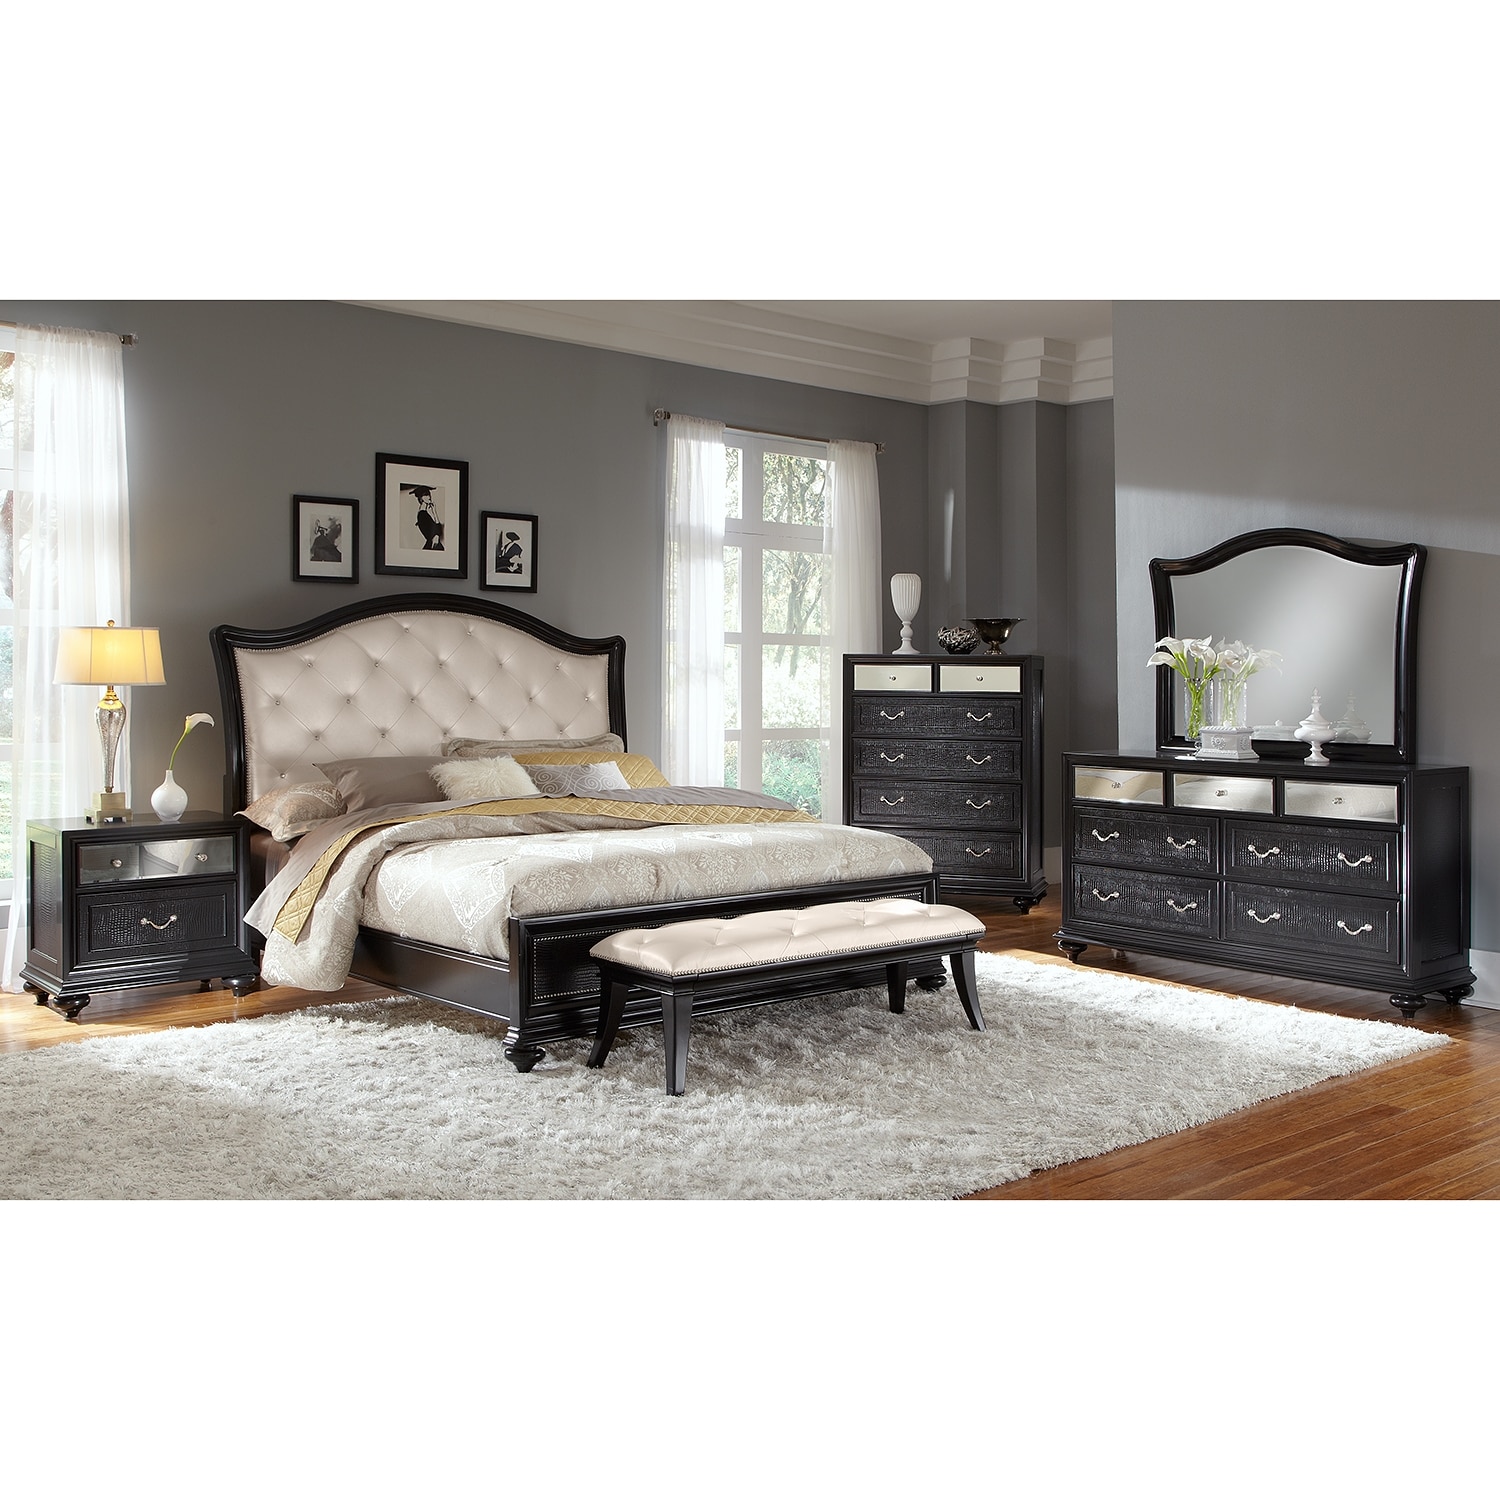 Standard Furniture Marilyn Upholstered Bed & Reviews | Wayfair